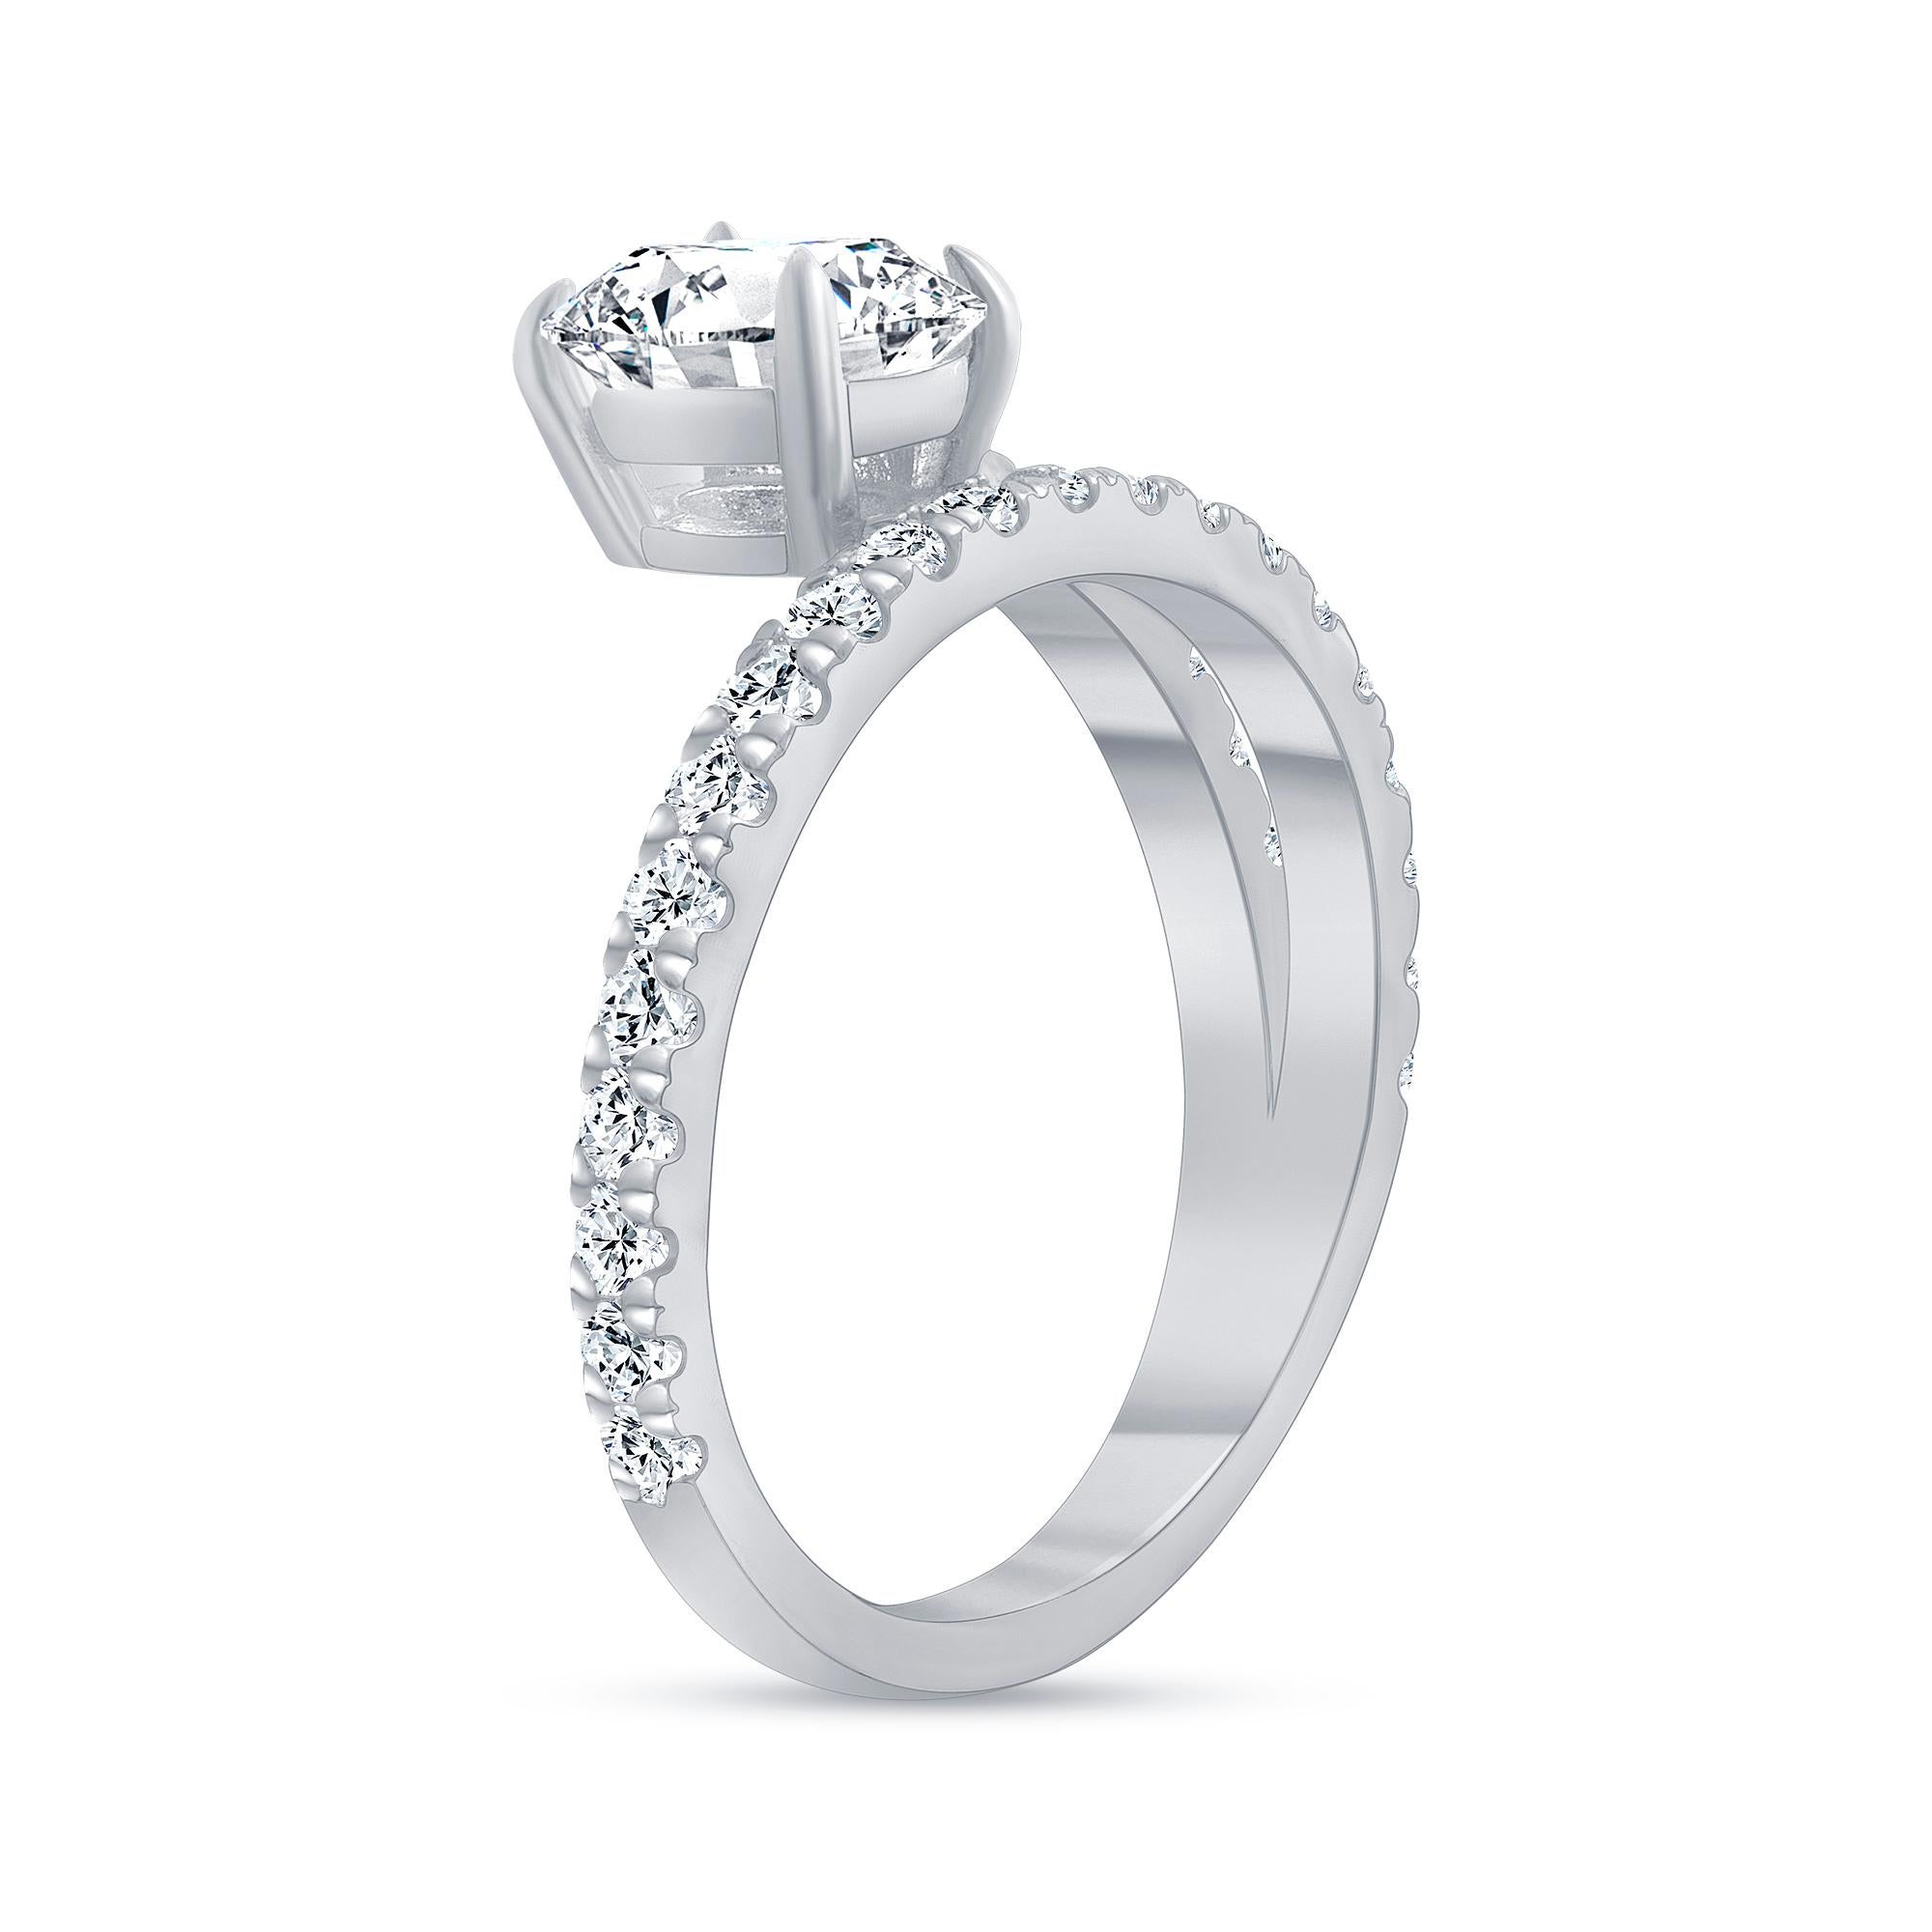 For Sale:  0.75 Carat Oval Cut Diamond Engagement Ring Design, '0.50 Carat Center Diamond' 2